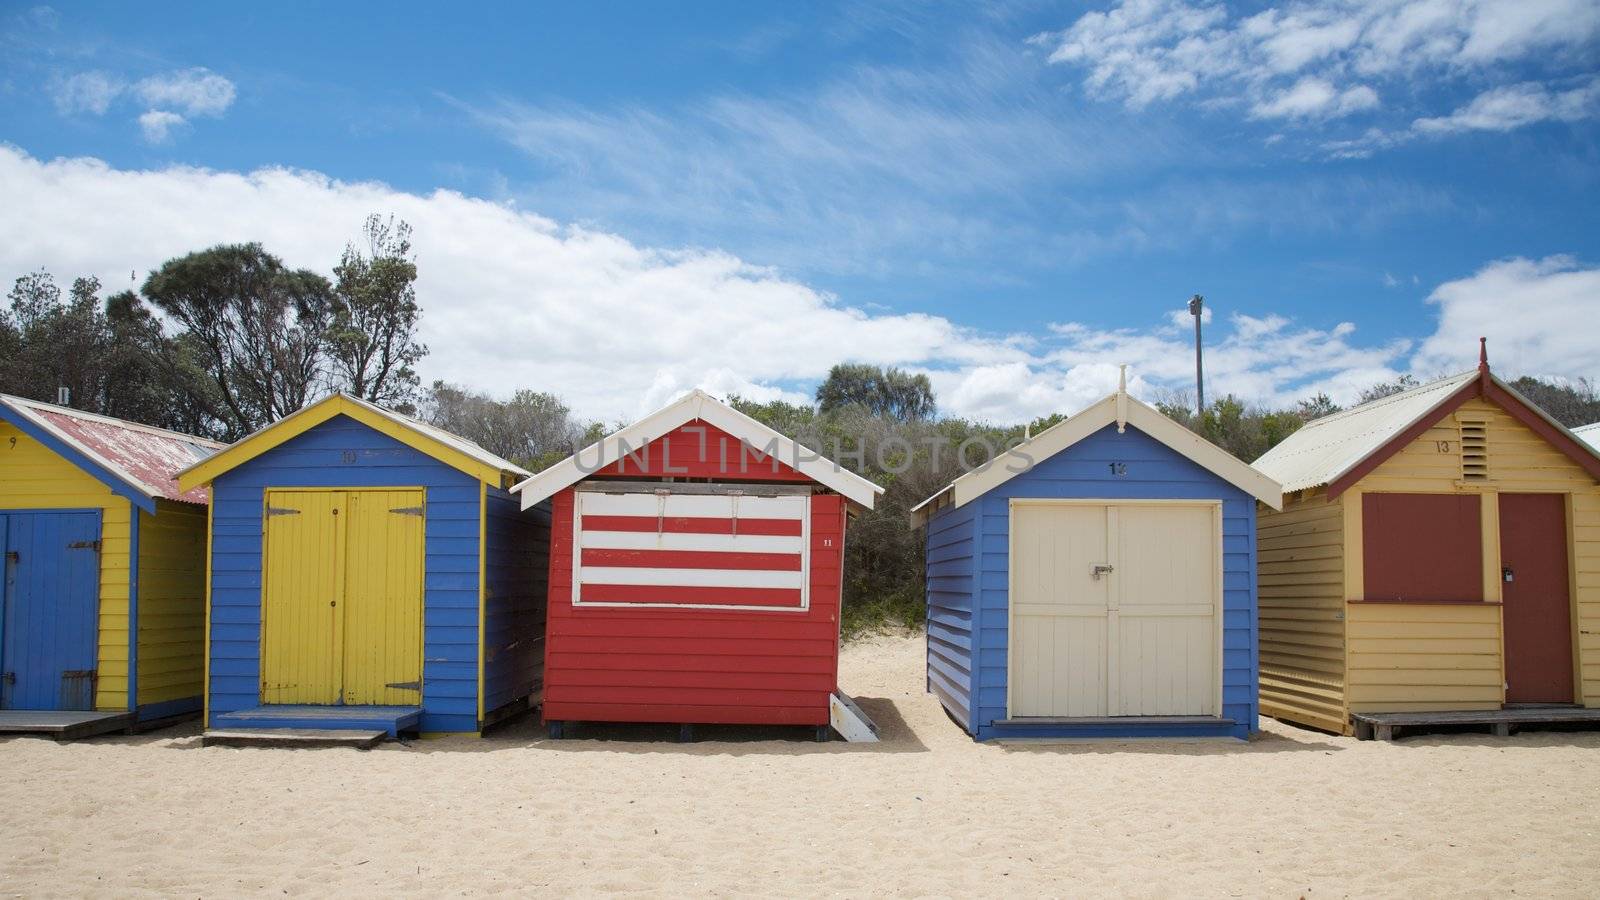 Colorful beach huts in Australia by instinia